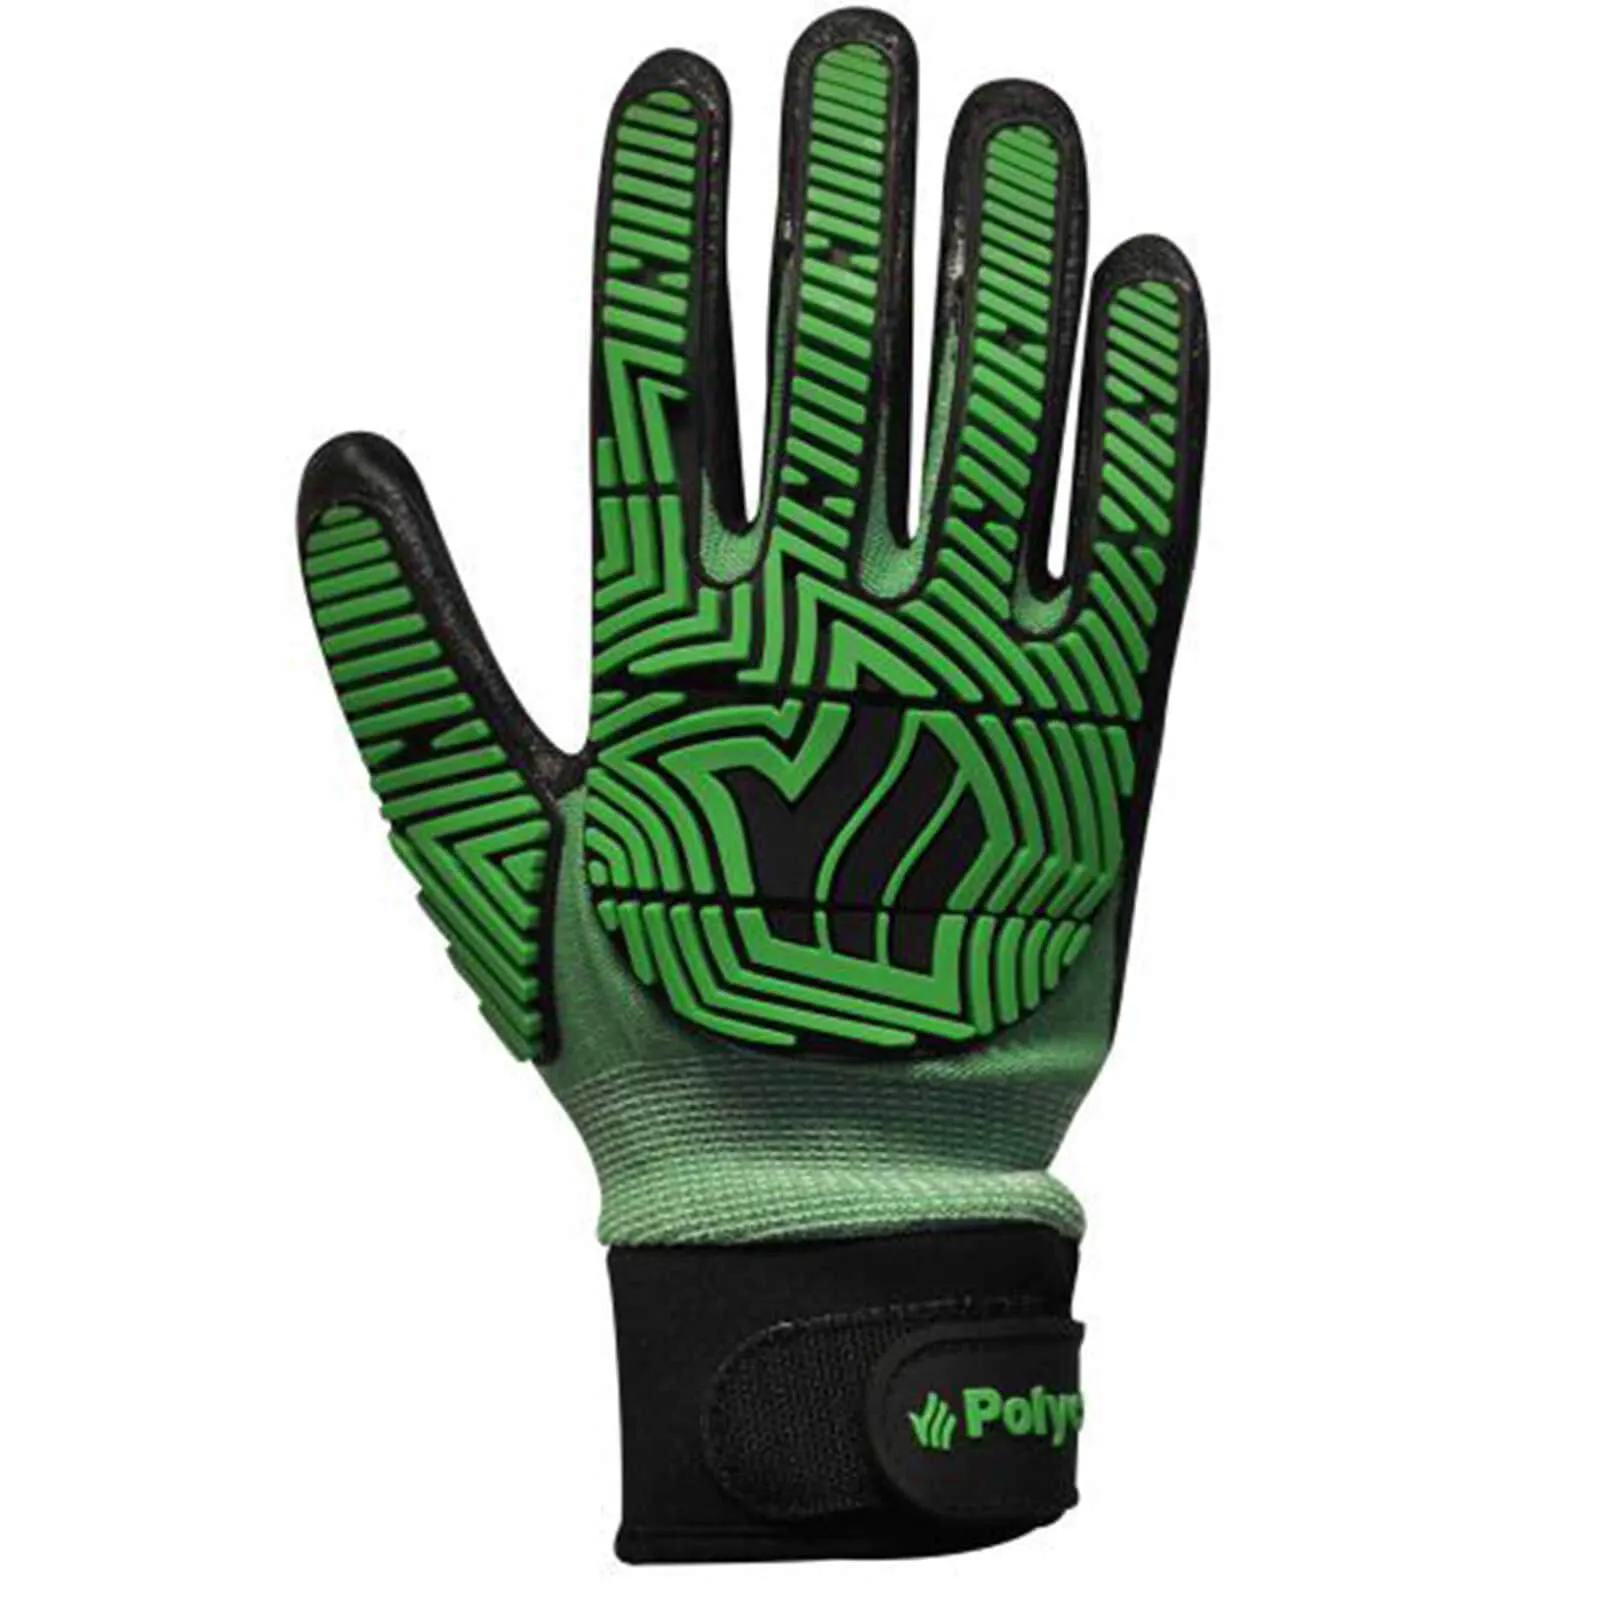 Polyco Polyflex Hydro C5 Safety Impact Gloves - L